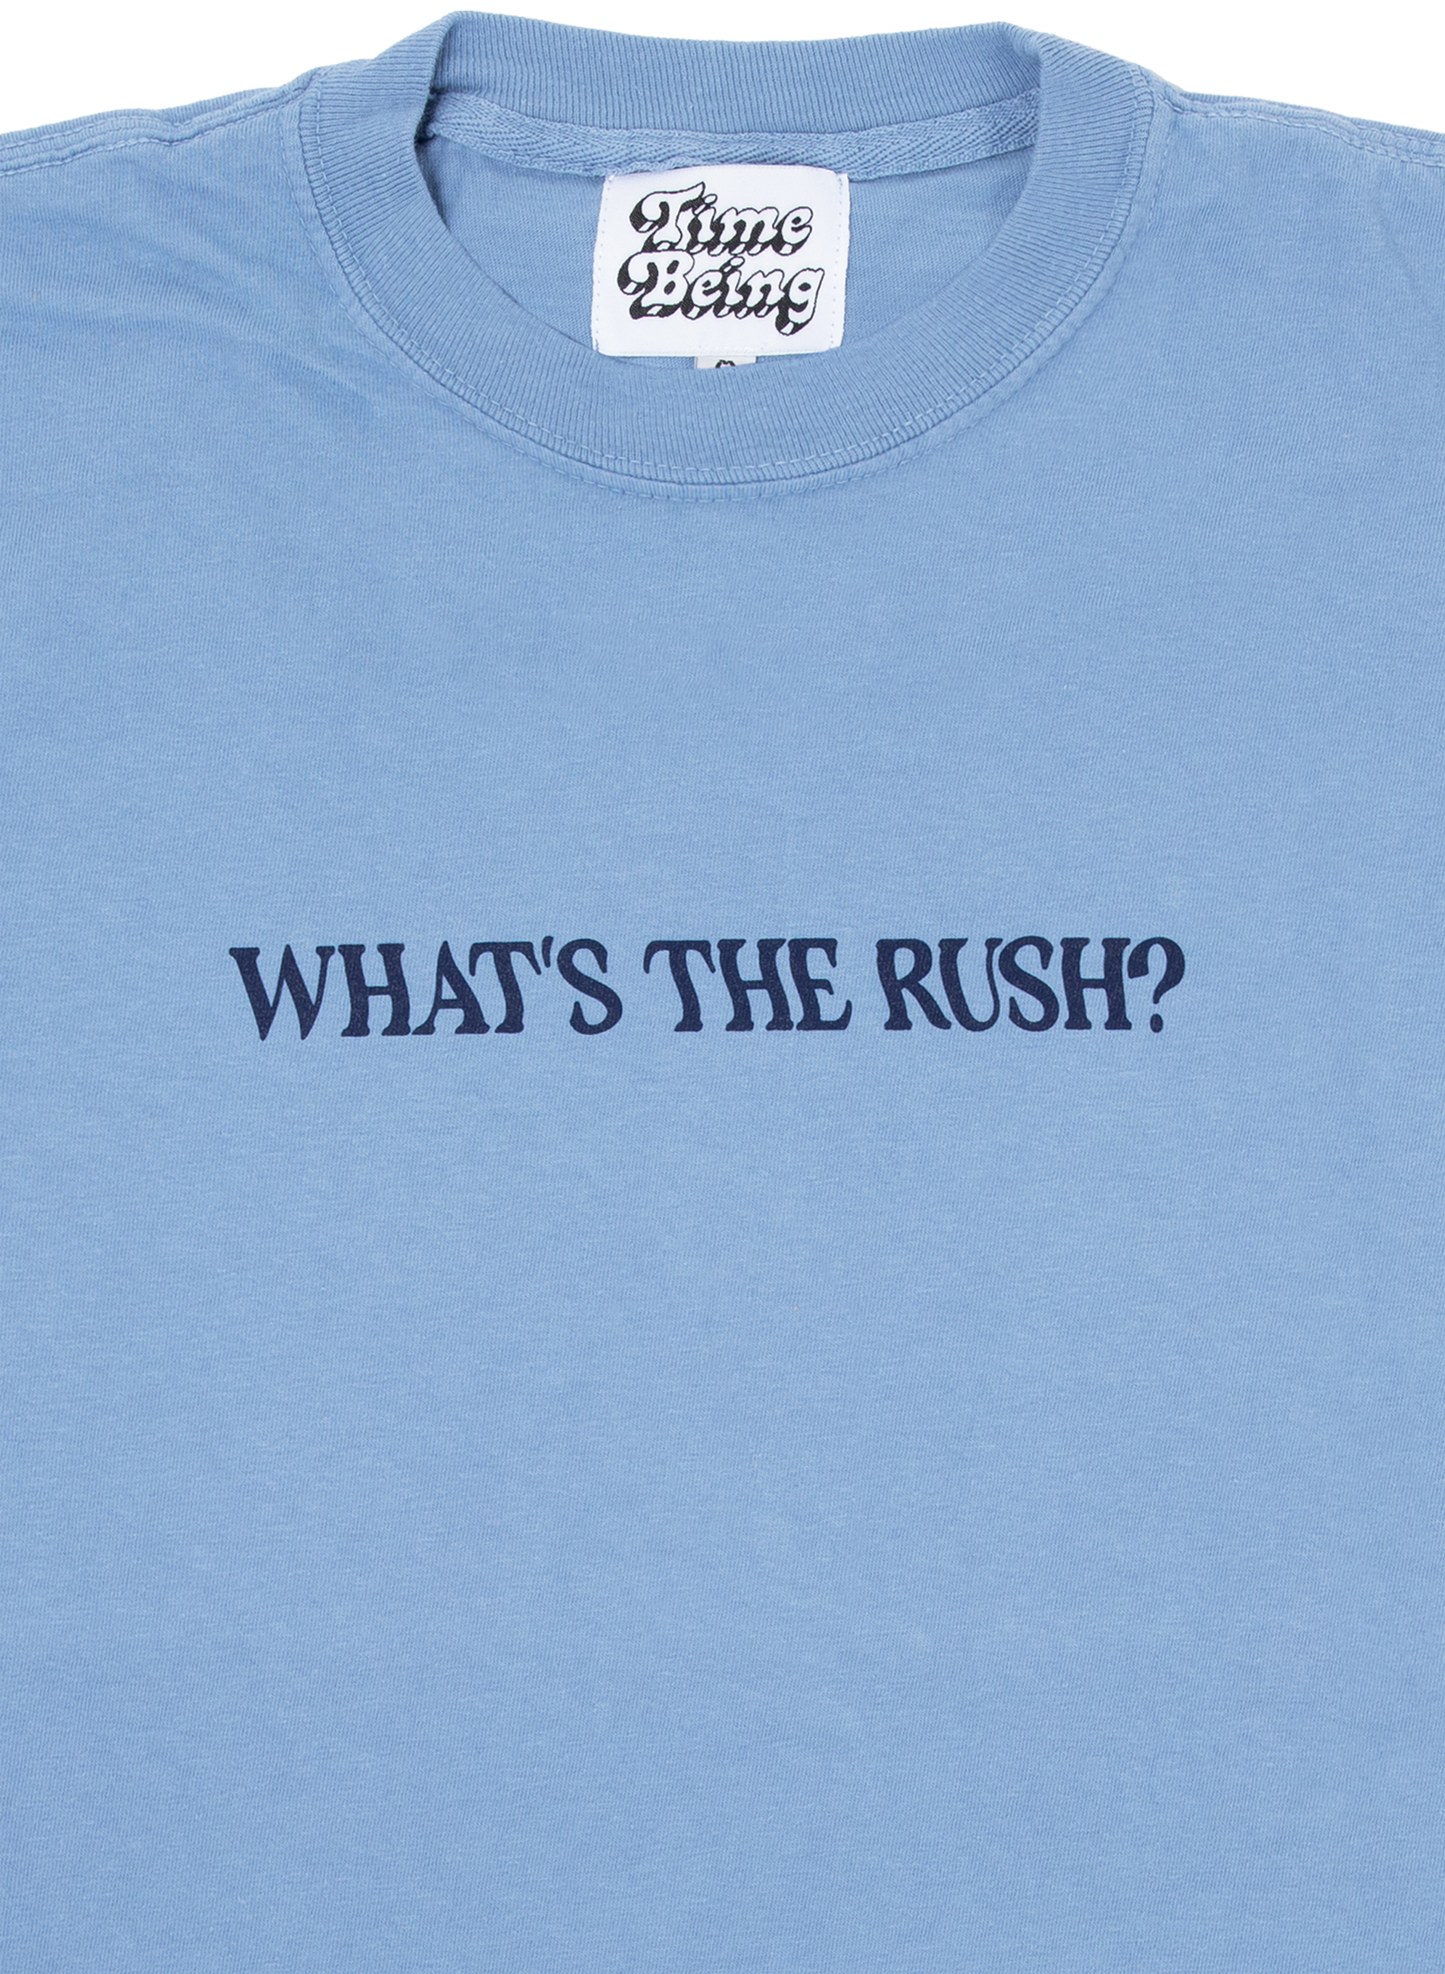 WHAT'S THE RUSH? T-SHIRT (BLUE)